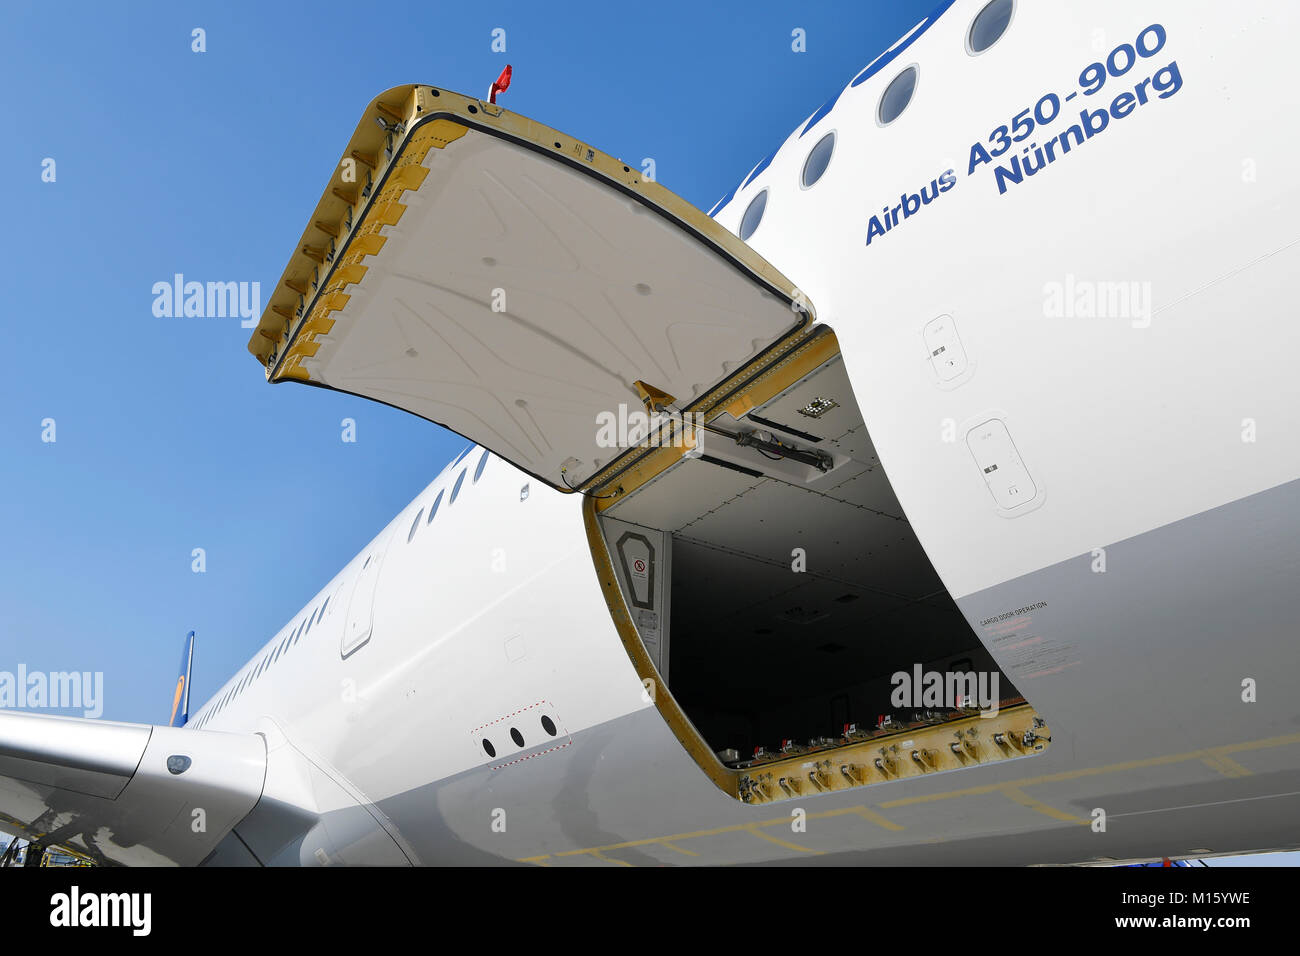 Loading Dock,Luggage,Cargo,Lufthansa Airbus A350-900,Munich Airport,Upper Bavaria,Germany Stock Photo